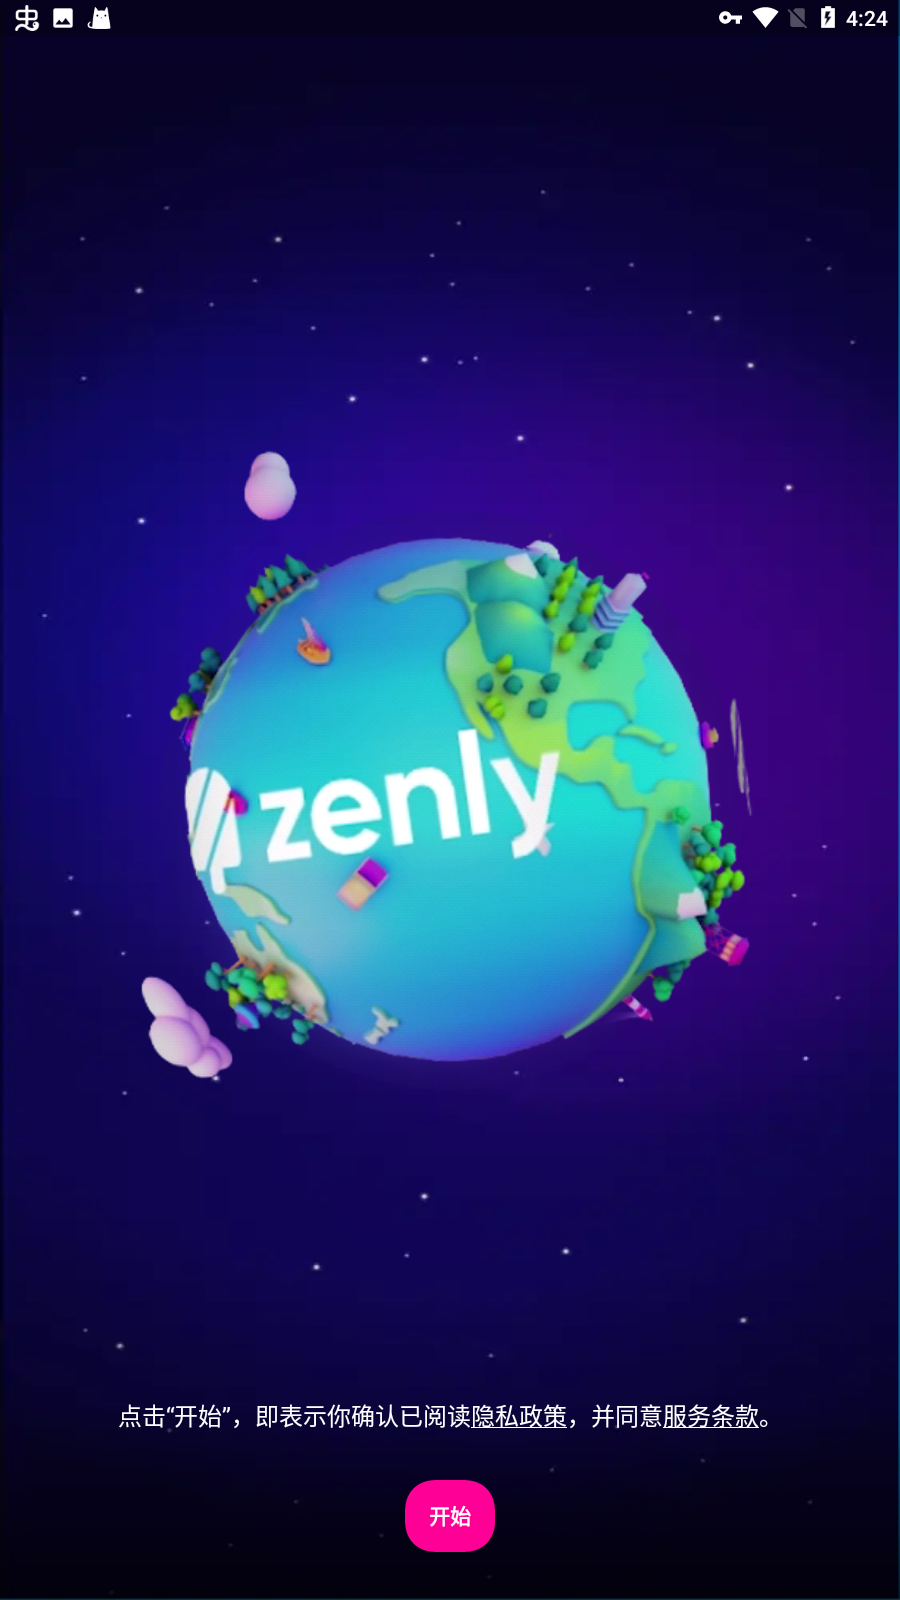 zenly定位软件最新版